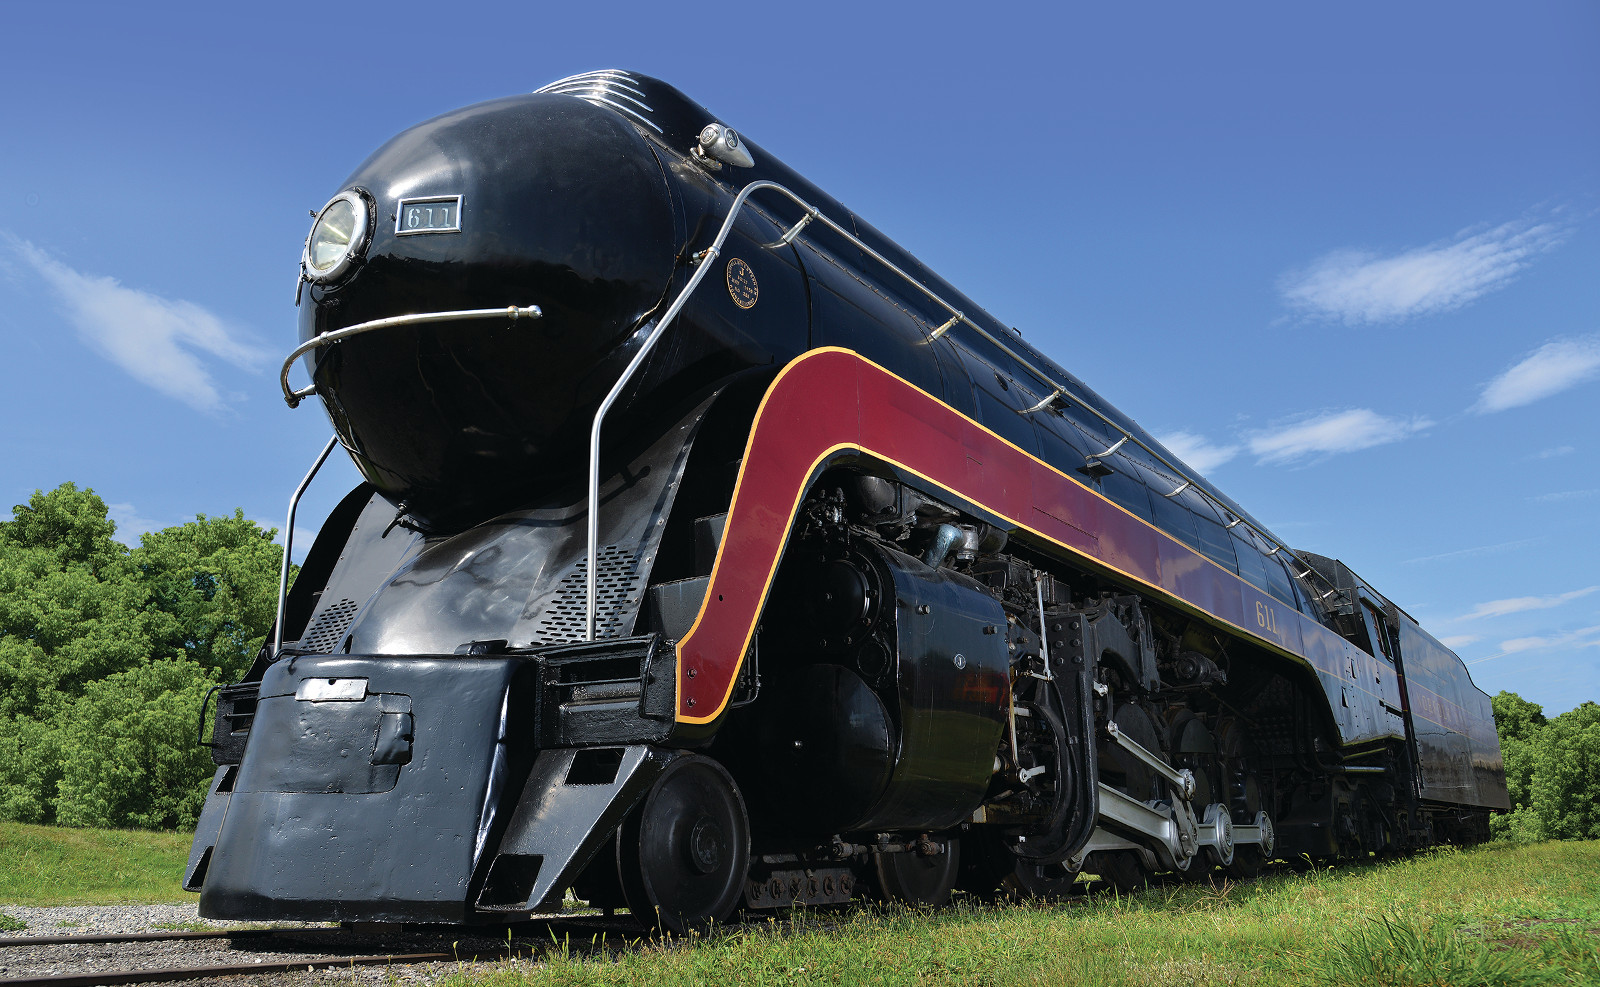  611 Steam Train Locomotive Returns To Roanoke